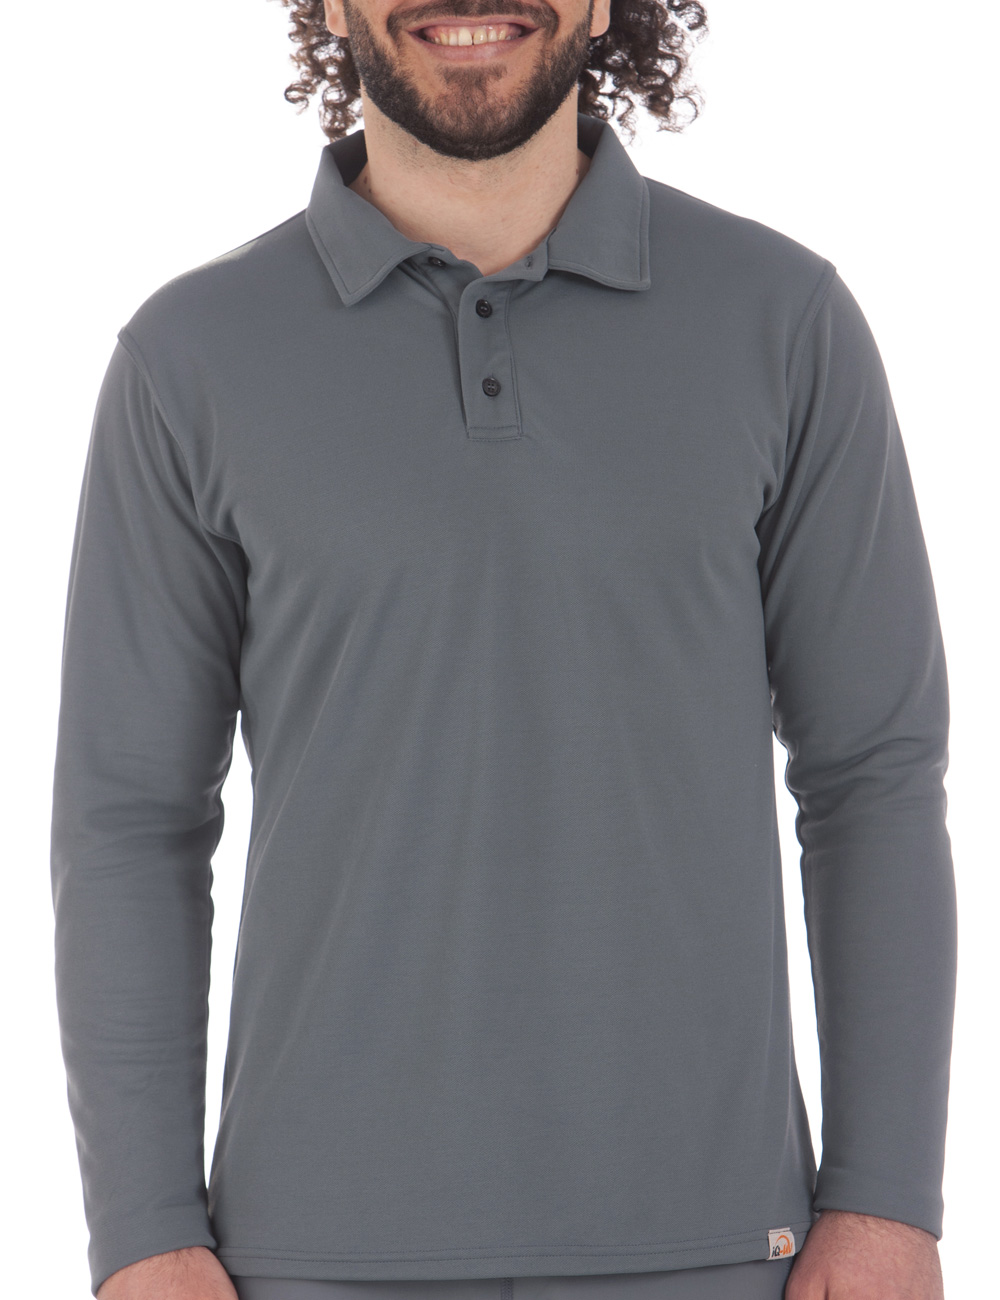 UV Schutz Polo Shirt langarm recycelt Herren grau front